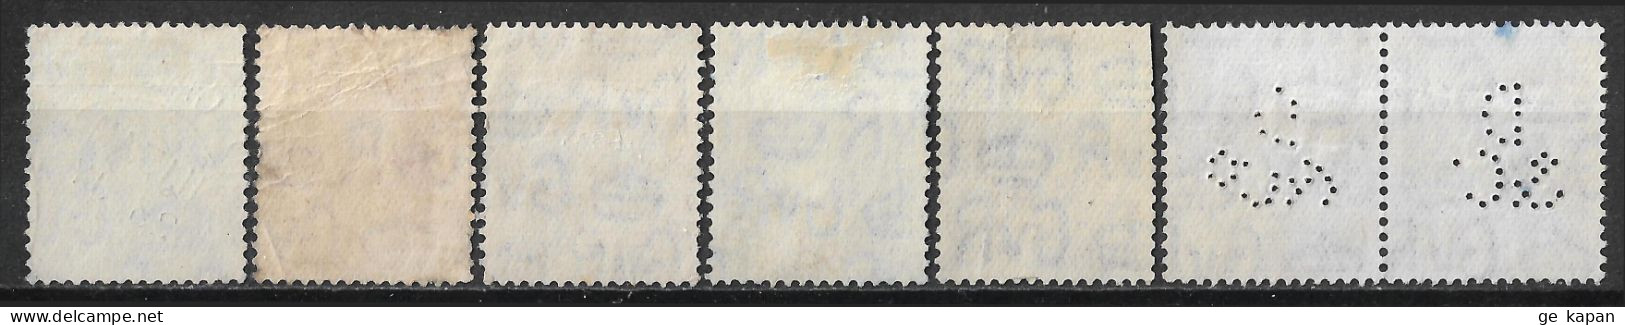 1934-1936 GREAT BRITAIN Set Of 7 Used Stamps (Scott # 210-212,214,215,220) CV $7.40 - Oblitérés